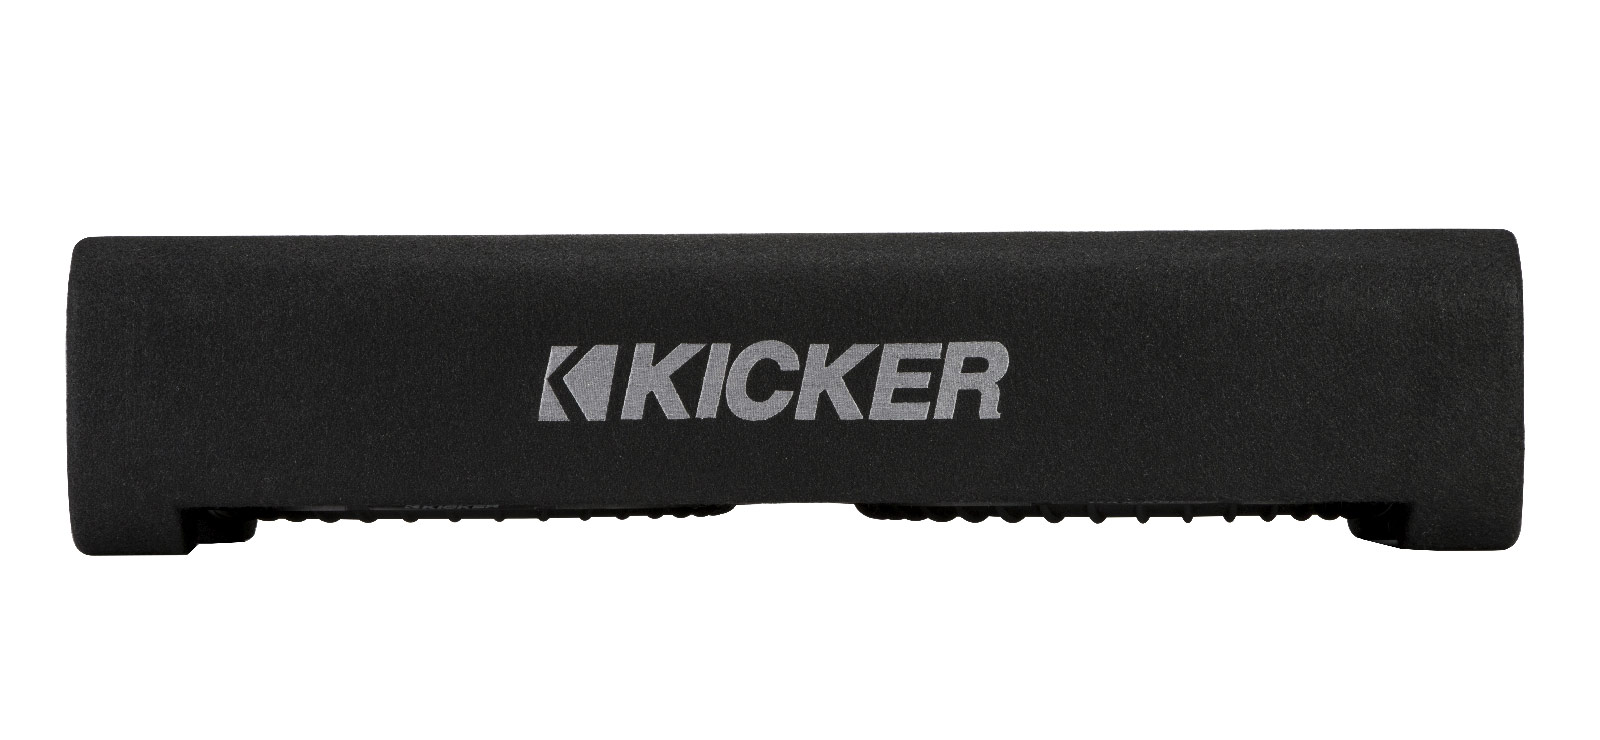 KICKER Key Technology 03 pasmag